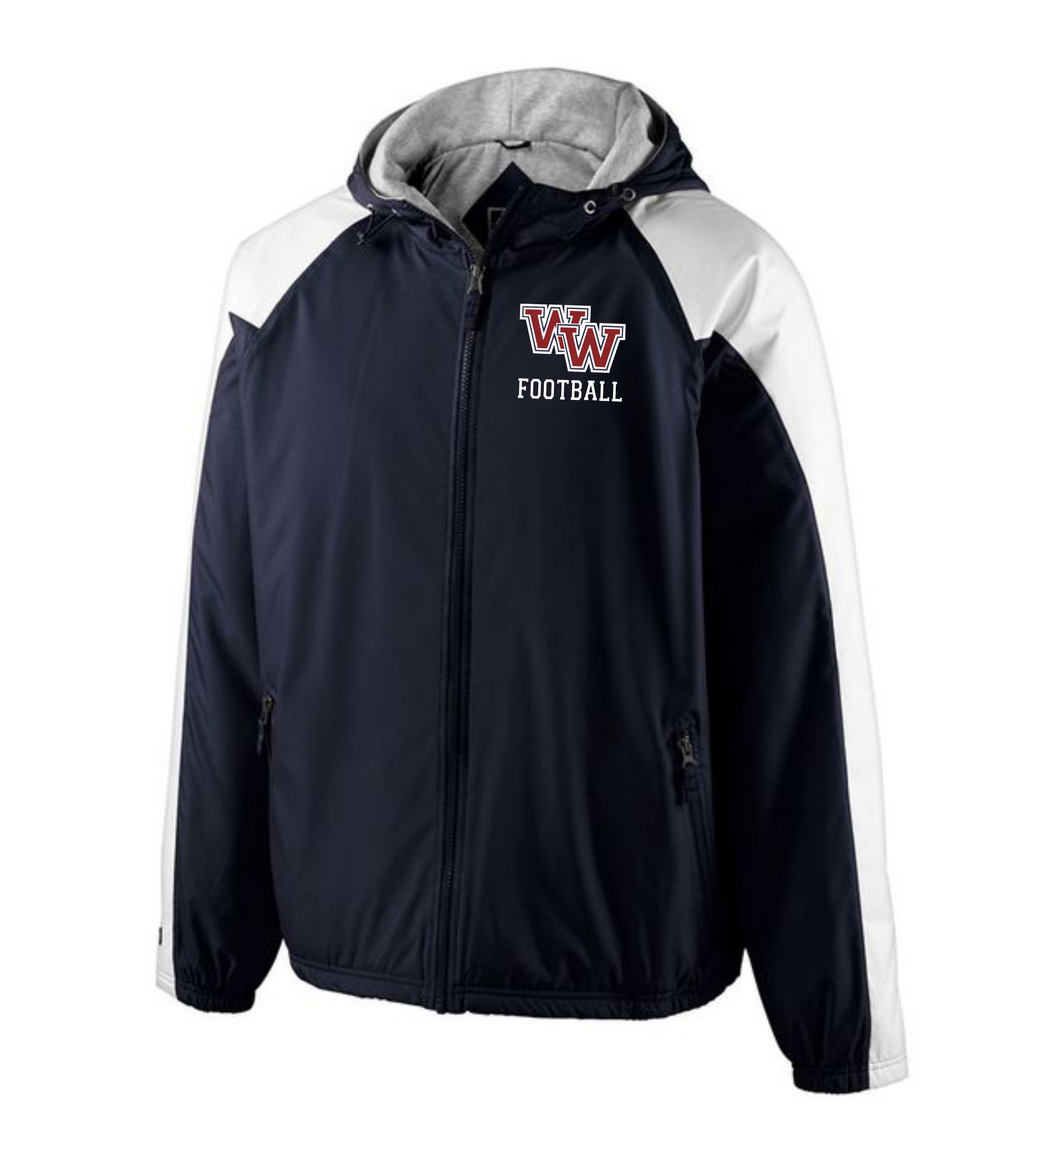 WW-FB-401-2 - Holloway Homefield Jacket - WW Football Logo